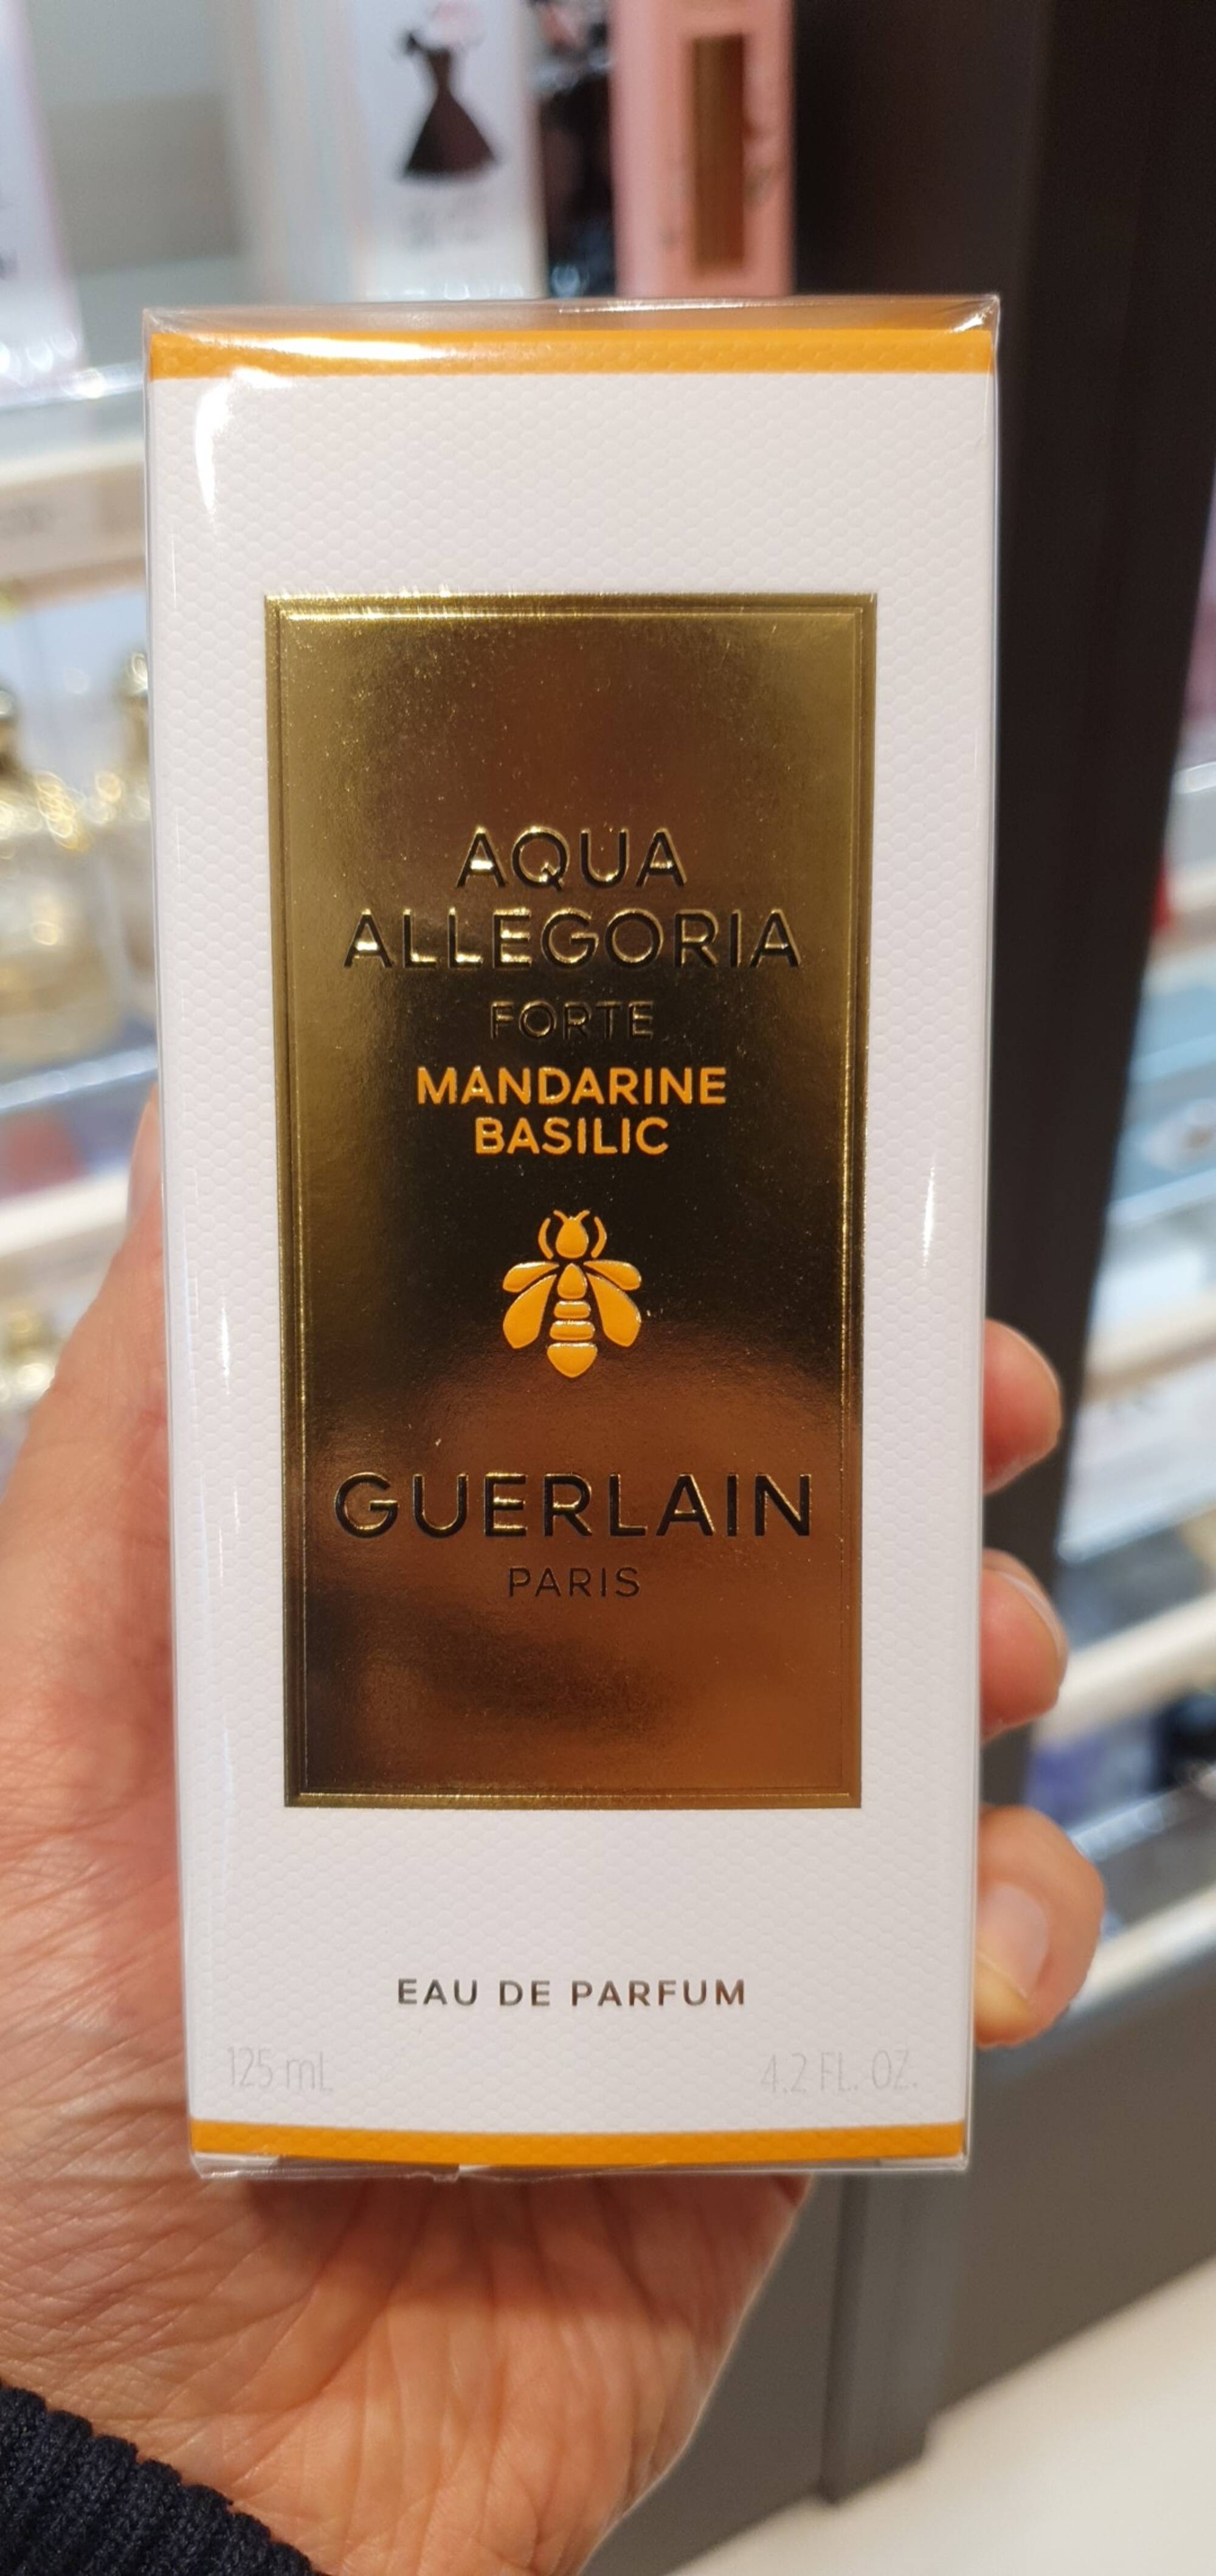 GUERLAIN PARIS - Mandarine basilic - Eau de parfum